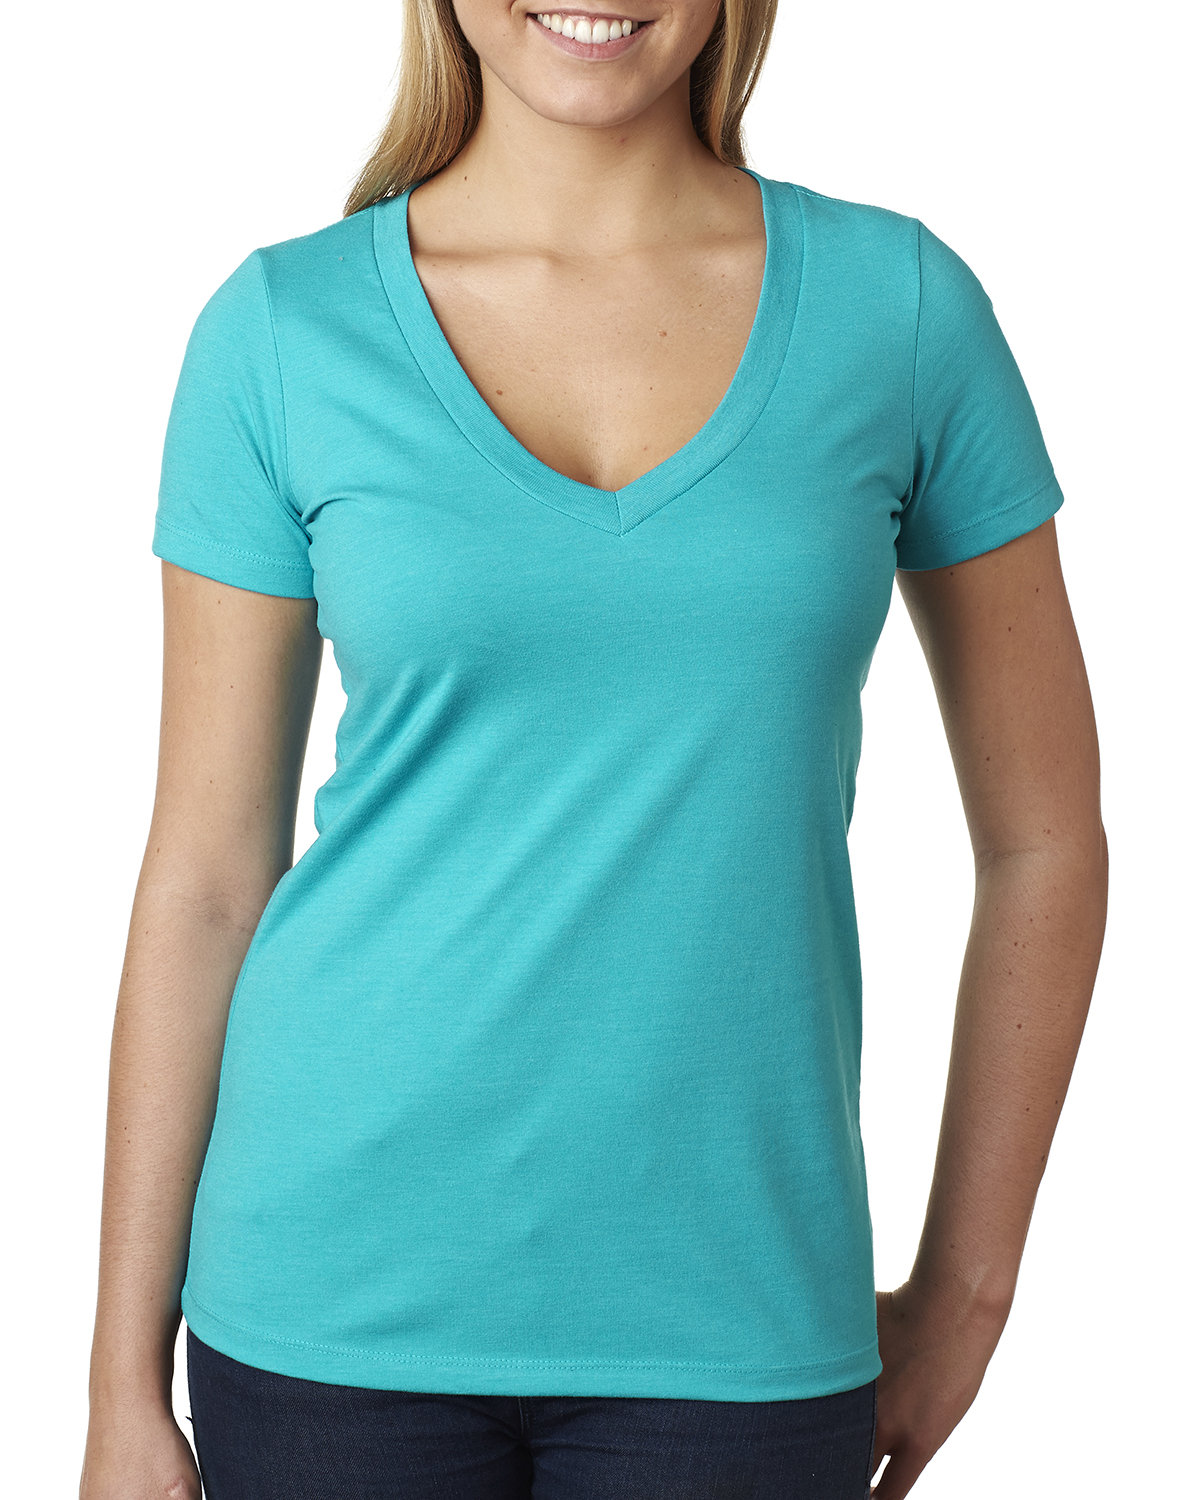 Next Level Apparel Ladies' CVC Deep V-Neck T-Shirt TAHITI BLUE 